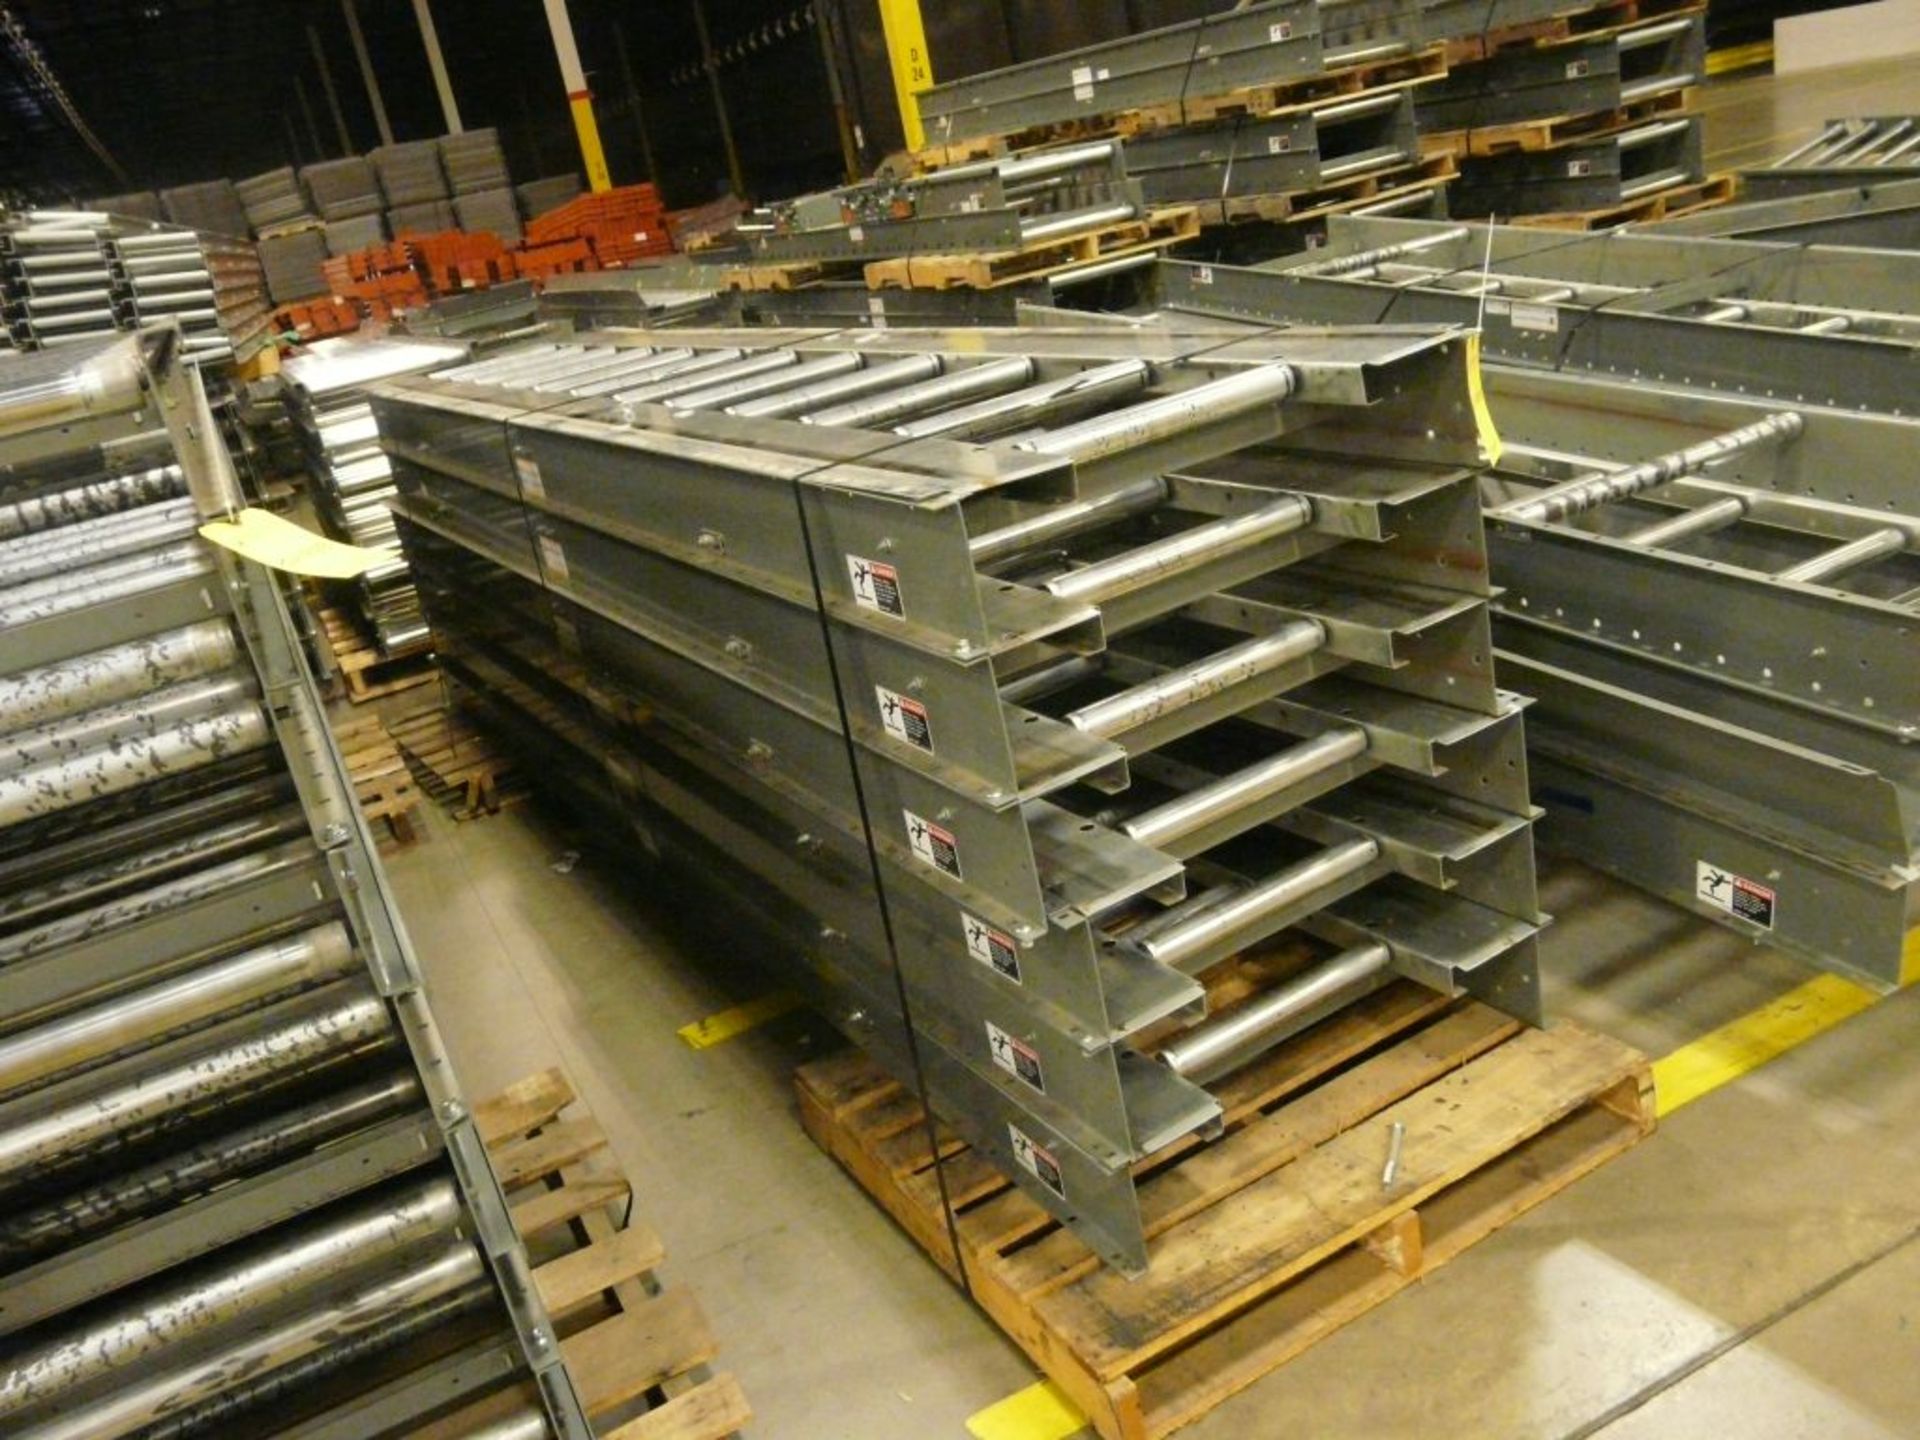 Lot of (6) 200 Belt Intermediate Conveyors - 12'L x 28"W; Tag: 223707 - $30 Lot Loading Fee - Image 2 of 4